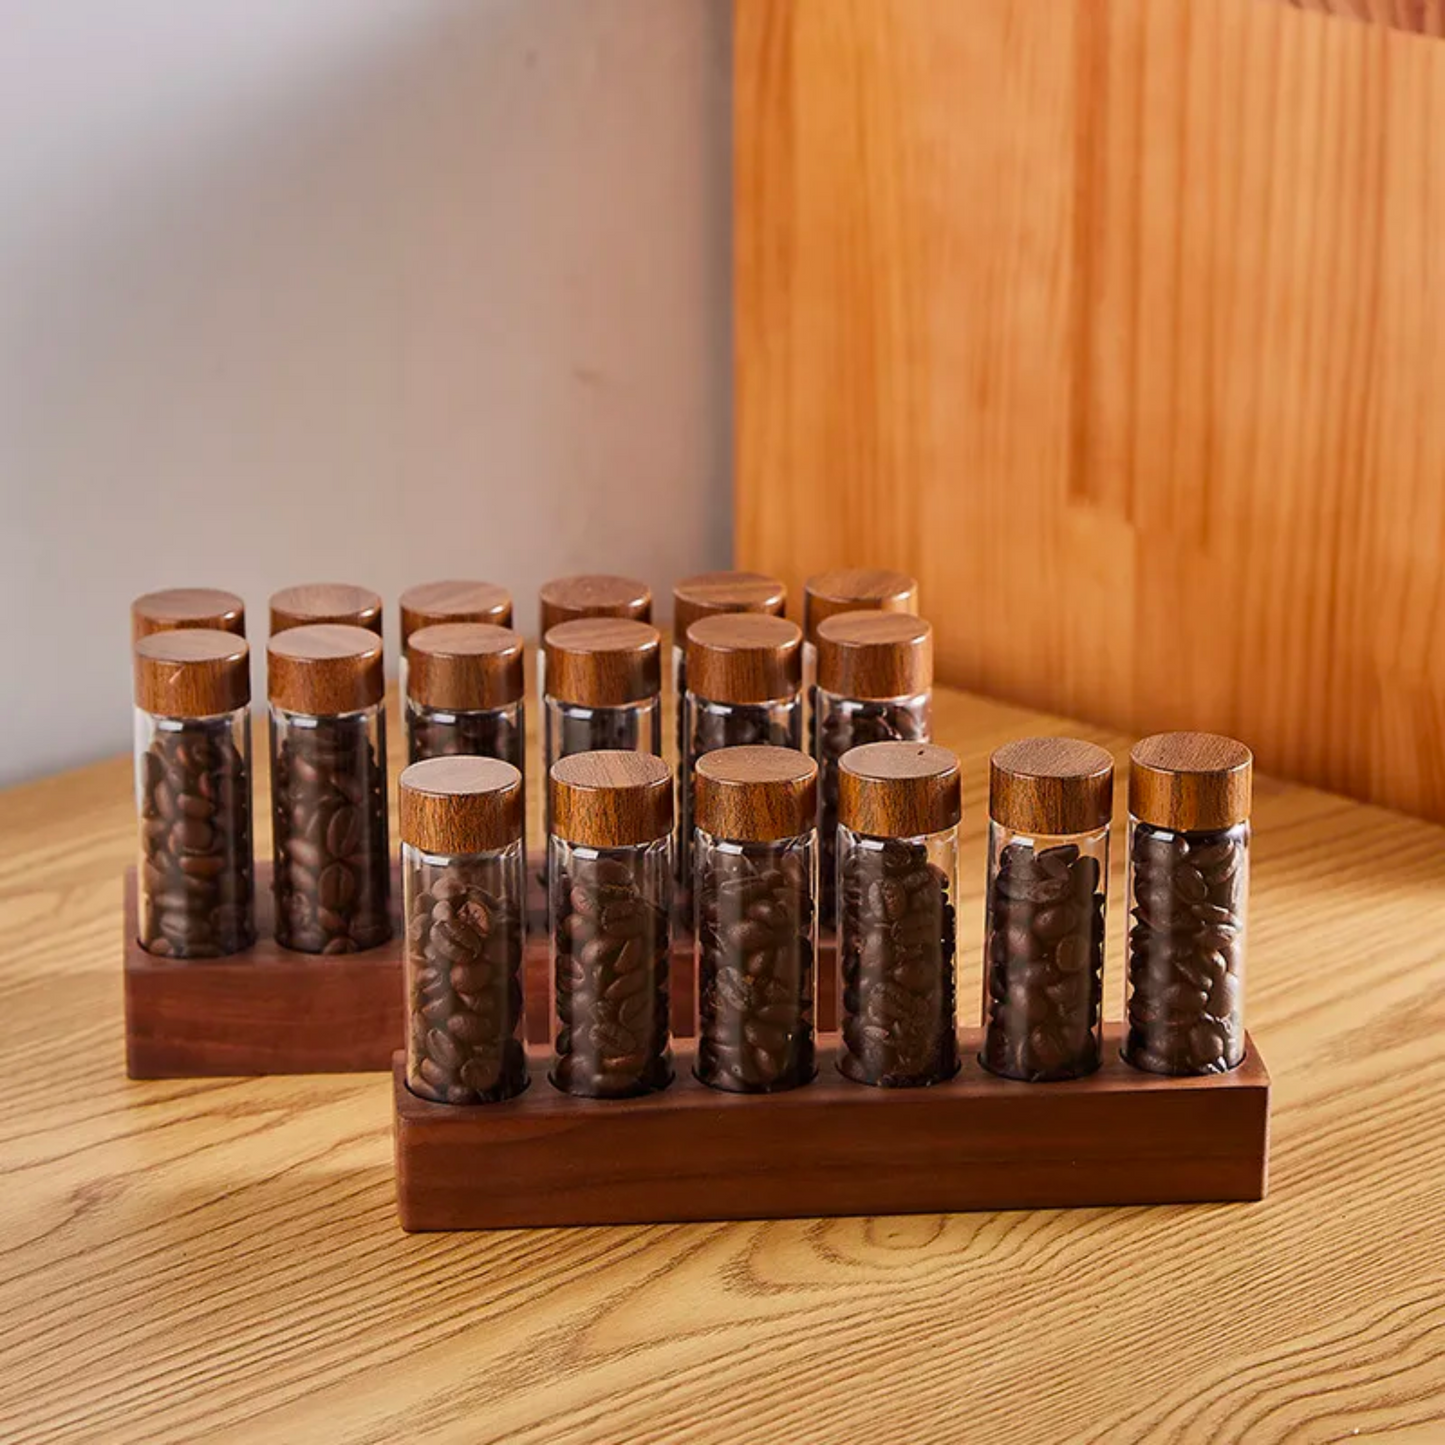 Single Dosing Beans Cellar with Walnut Wood Display Rack